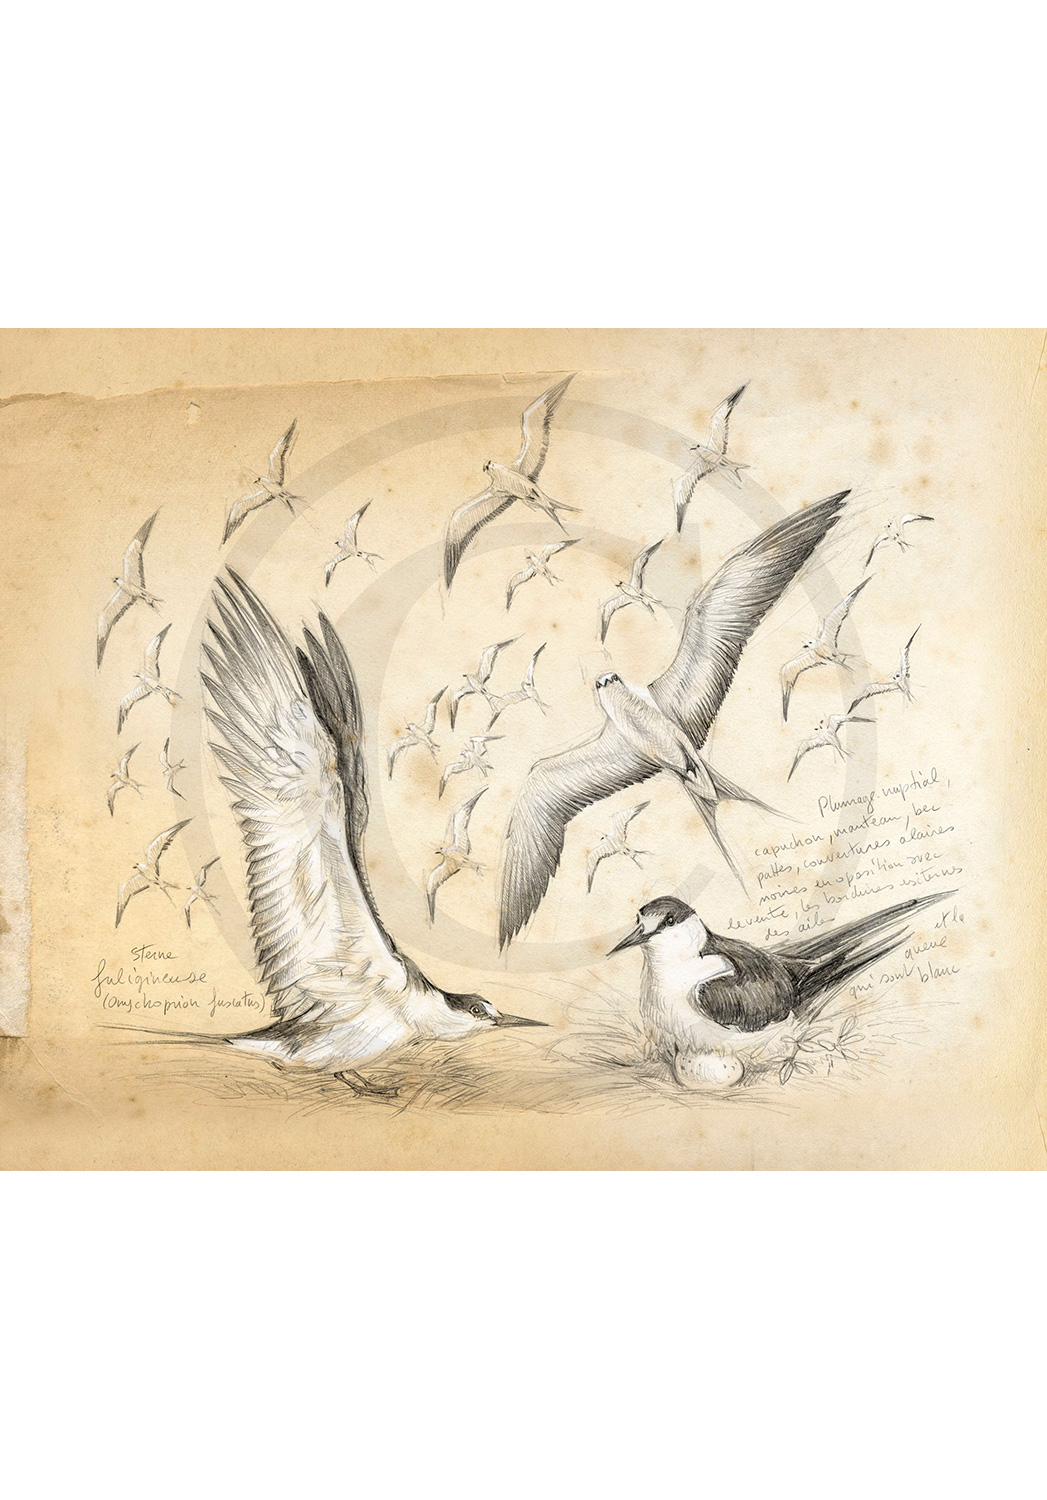 Marcello-art: Ornithology 337 - Sooty terns